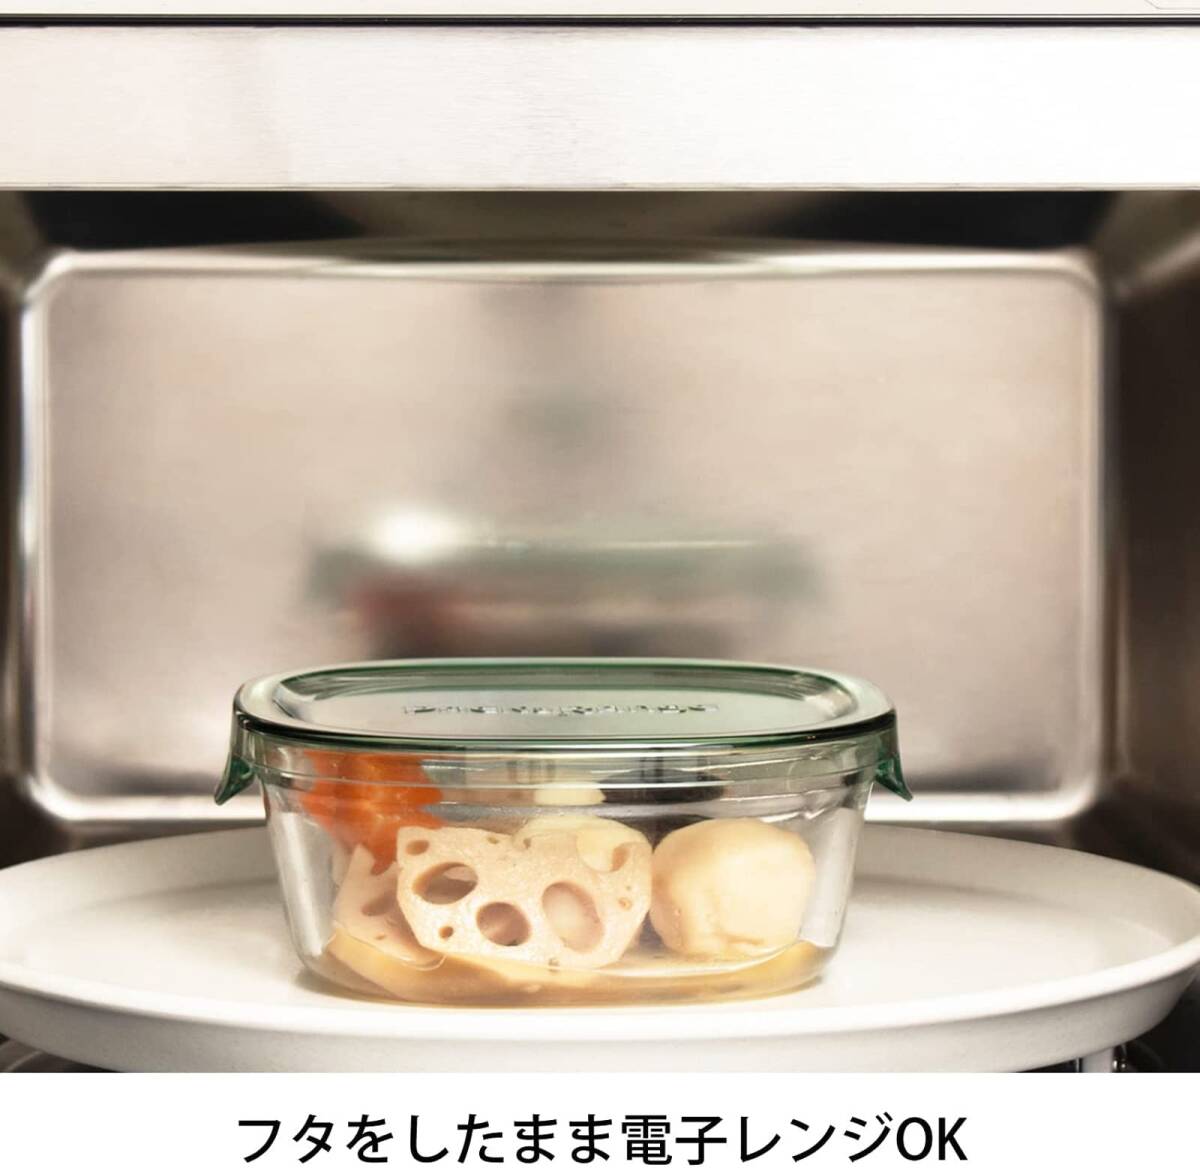 iwaki(イワキ) 耐熱ガラス 保存容器 オリーブグリーン 角型 4点セット パック&レンジ PC-PRN4G41_画像4